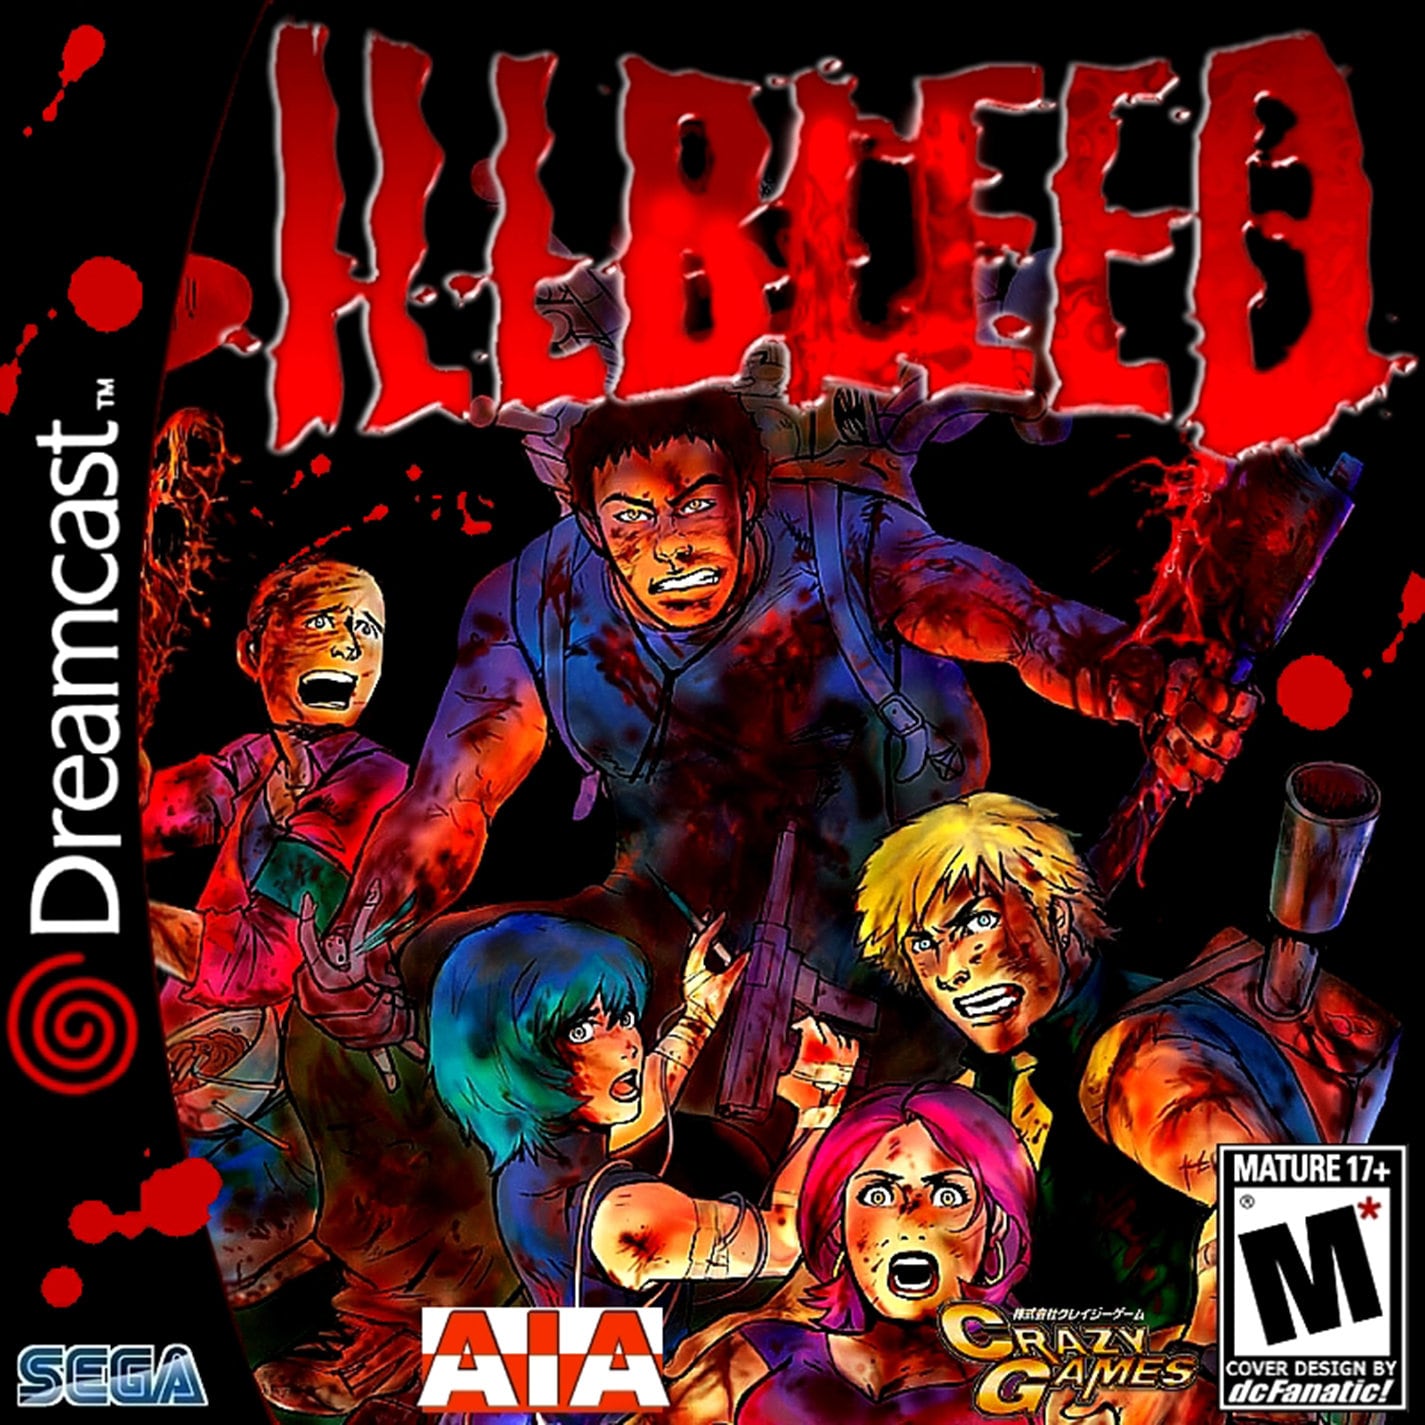 Illbleed (2001, Dreamcast)